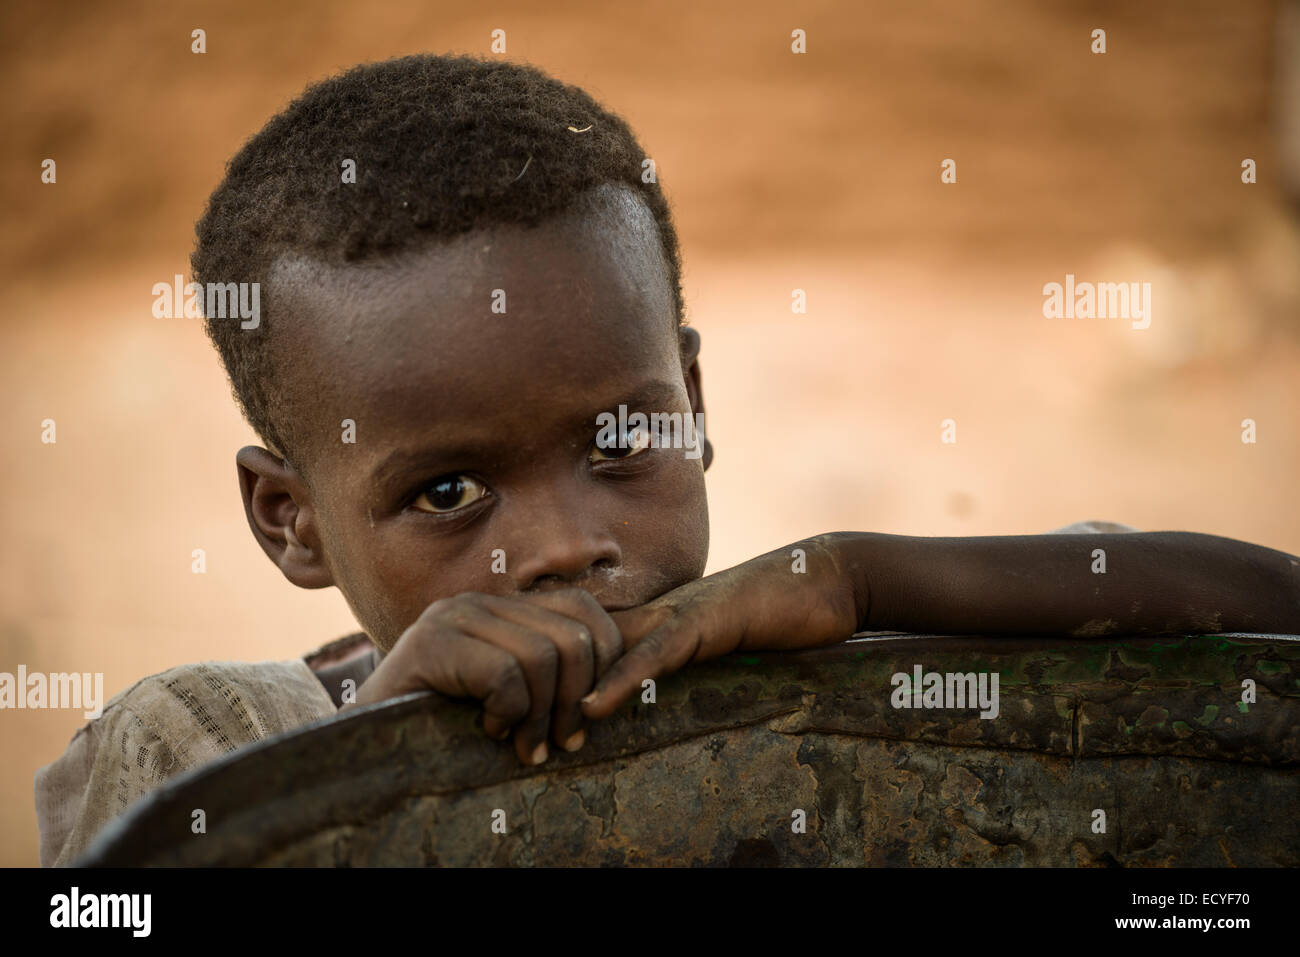 Boy of the Sahel, Sudan Stock Photo